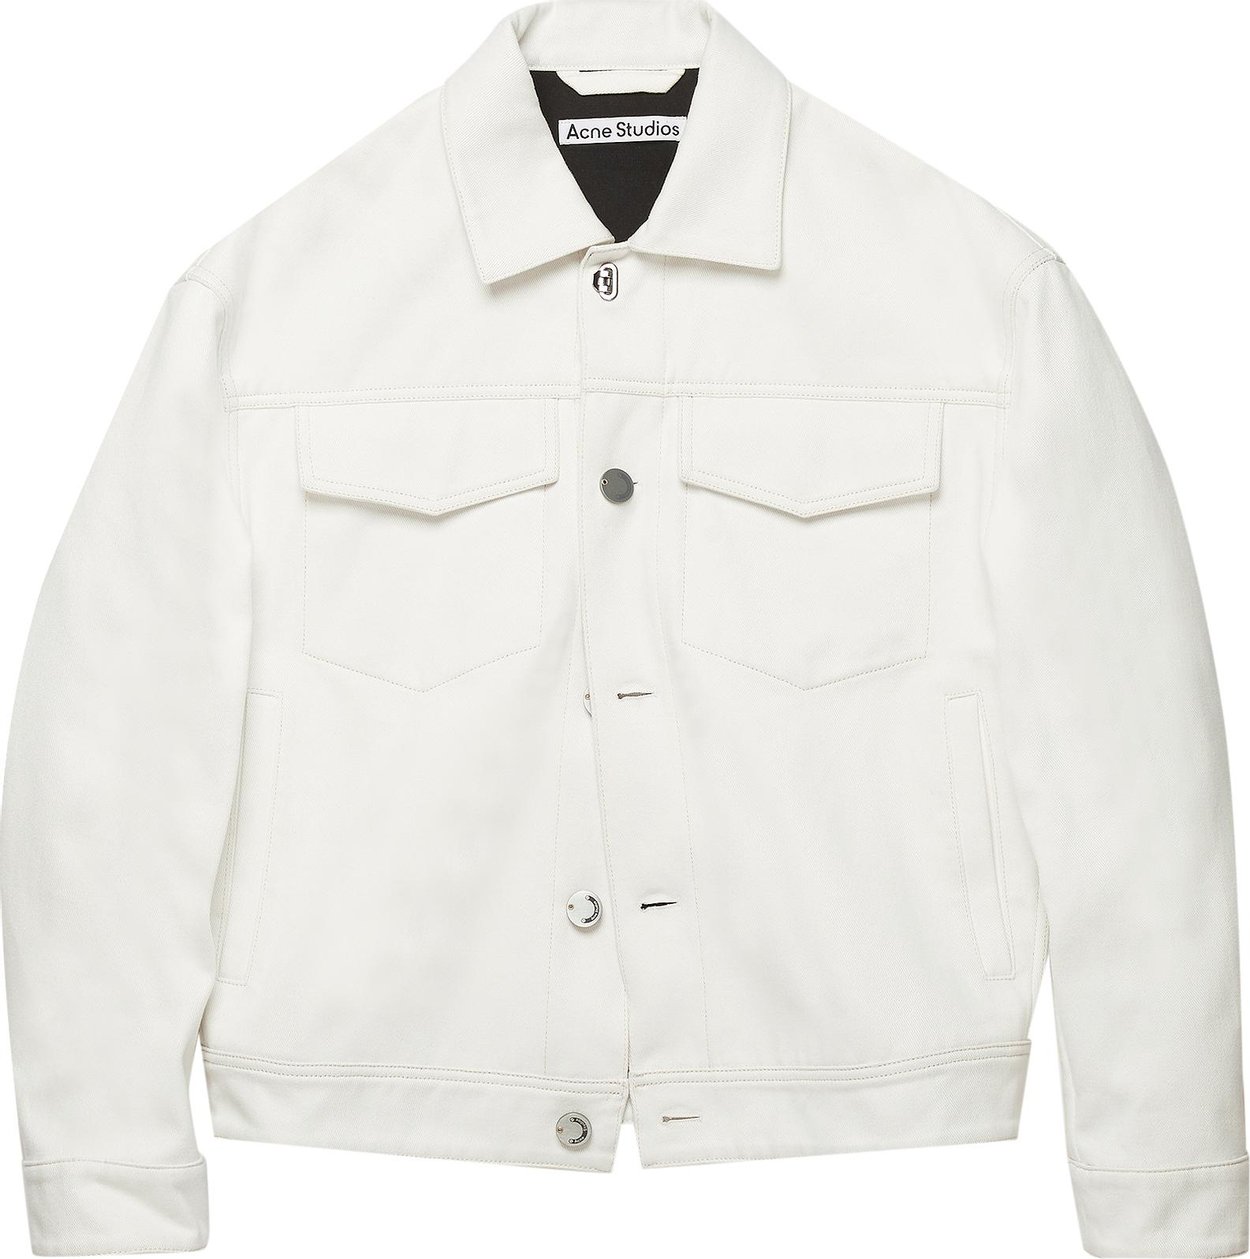 Buy Acne Studios Cotton Twill Jacket 'Off White' - B90471 GOAT OFF | GOAT